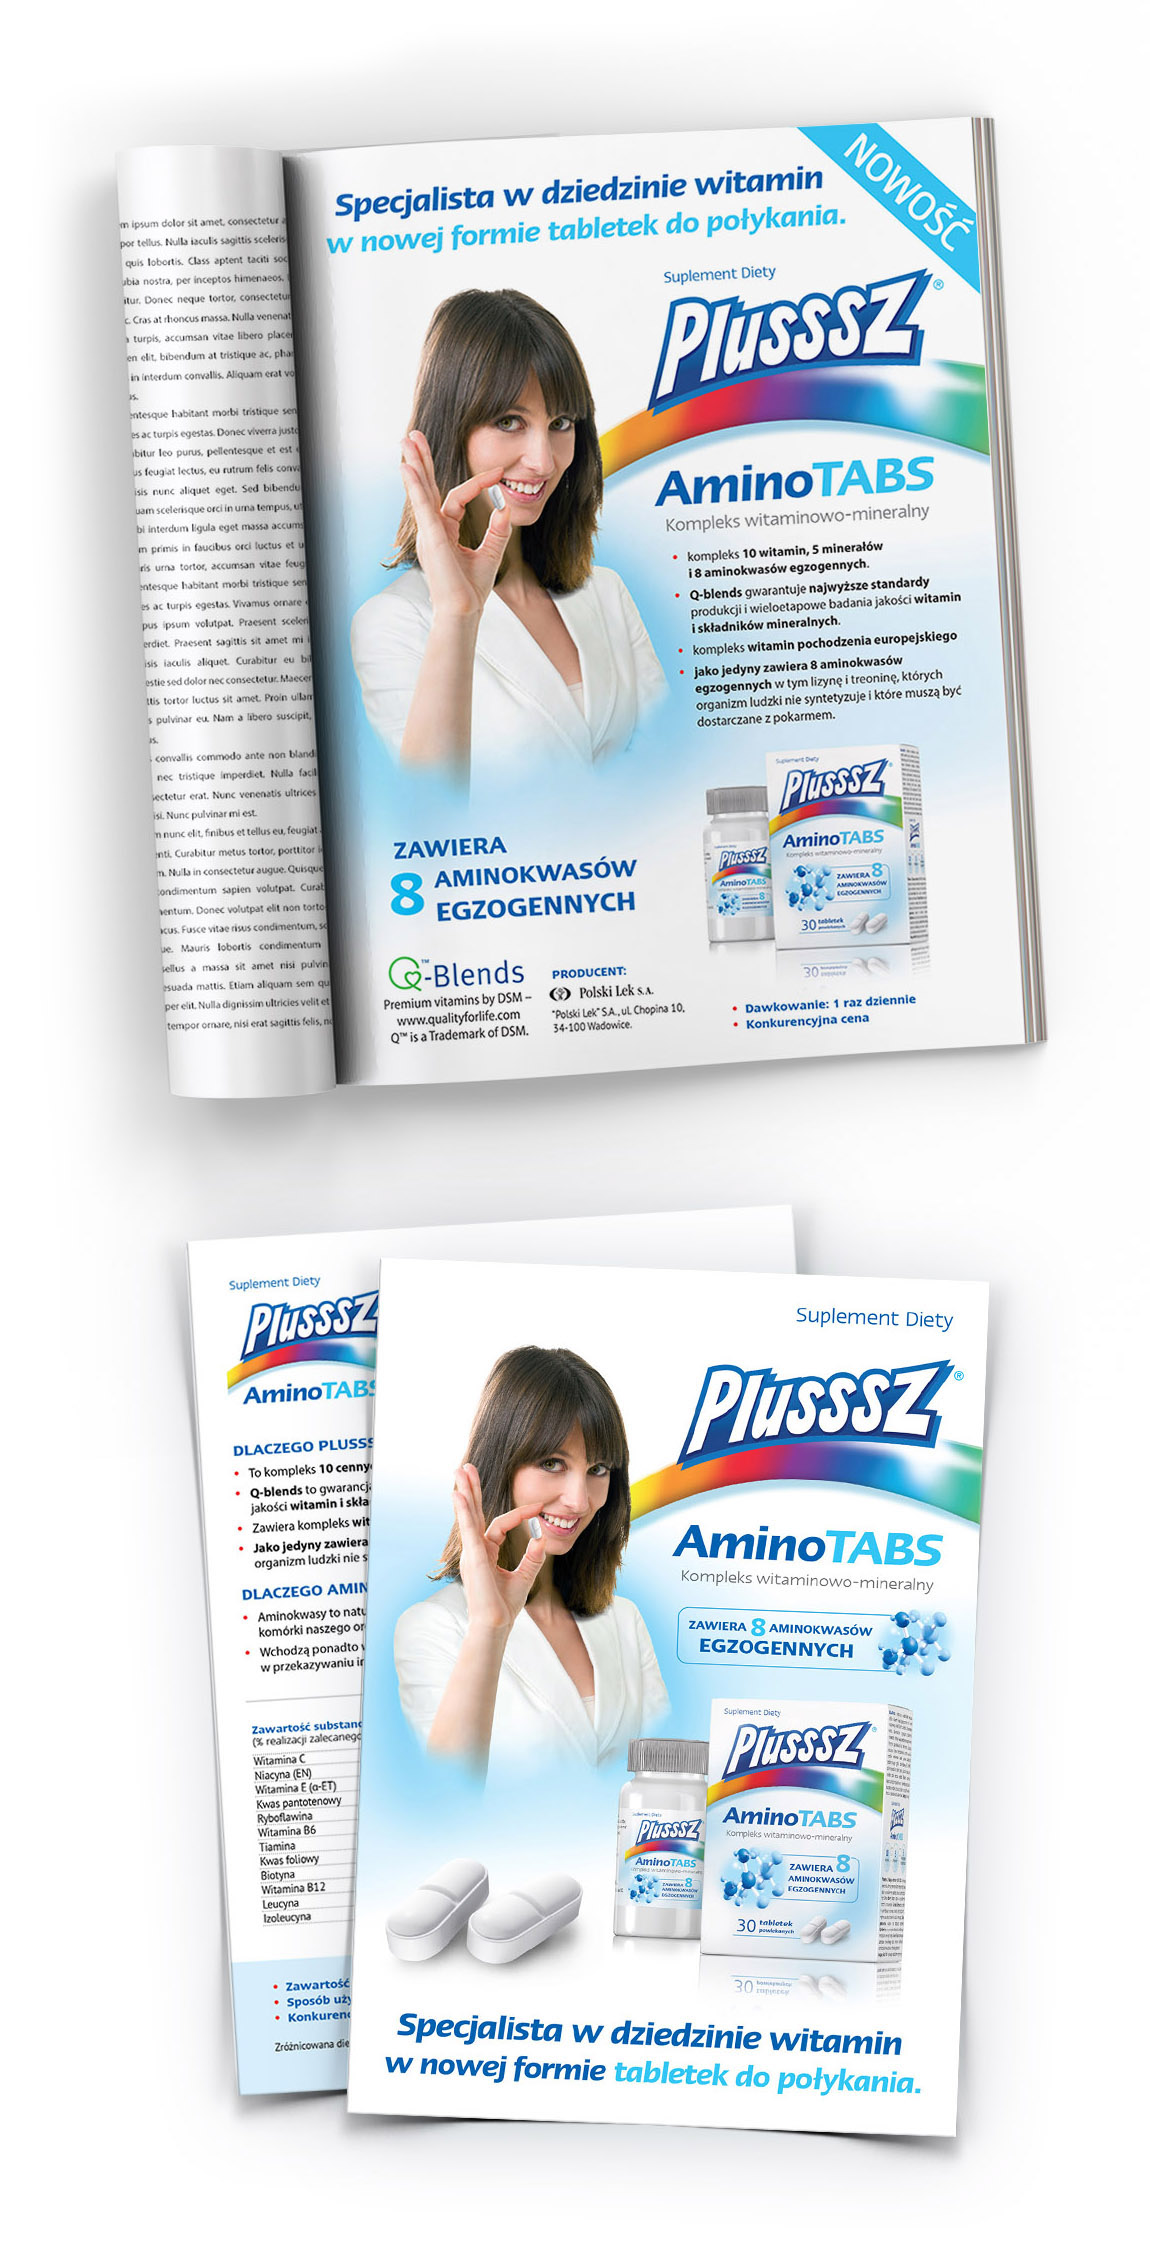 plusssz tabs tablets vitamins minerals Amino acids amino Acids drug pharmacy medicine rainbow